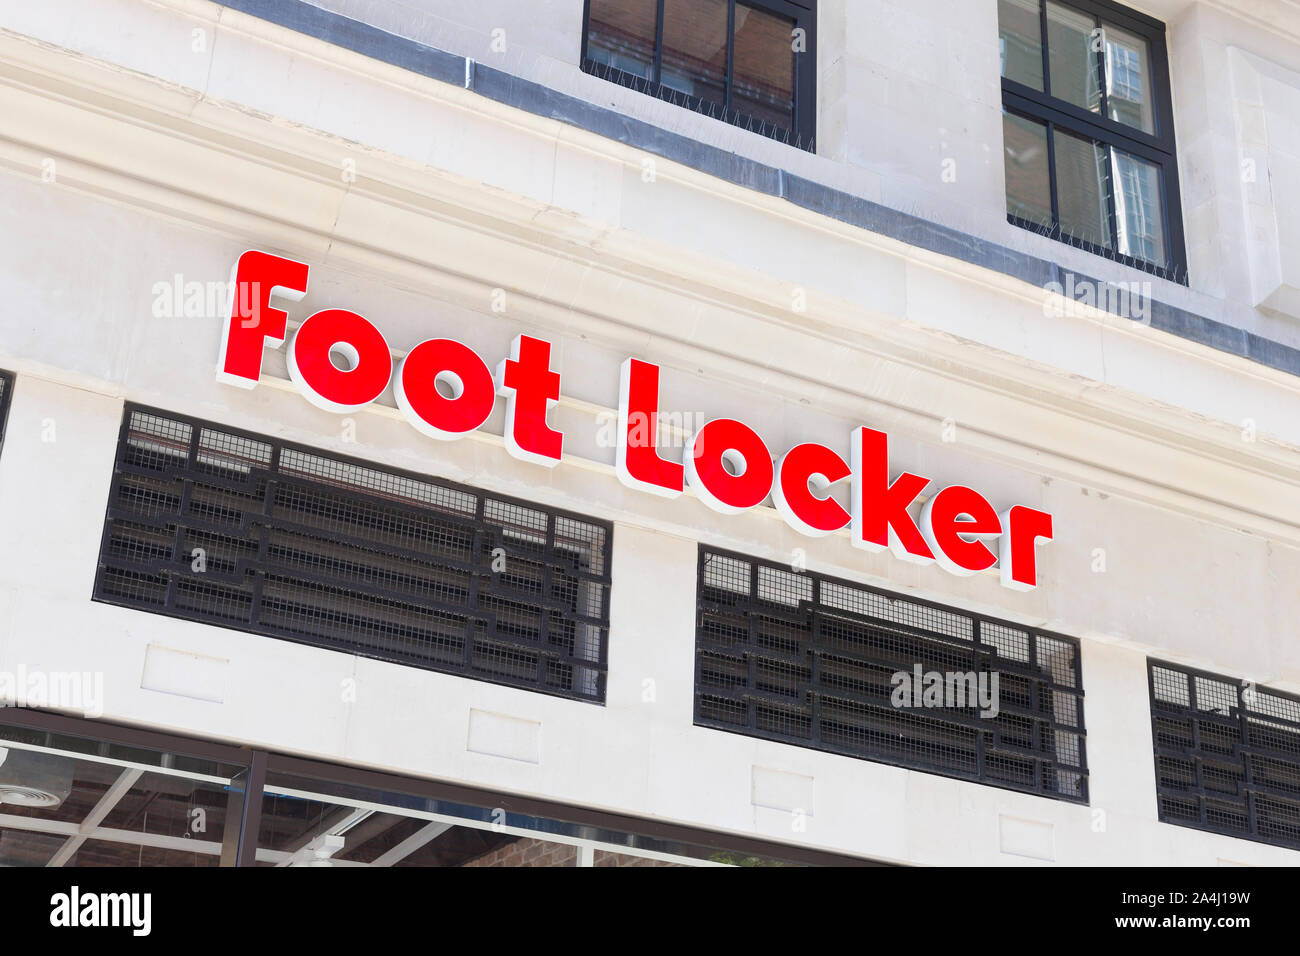 Foot locker sign logo, London, England Stock Photo